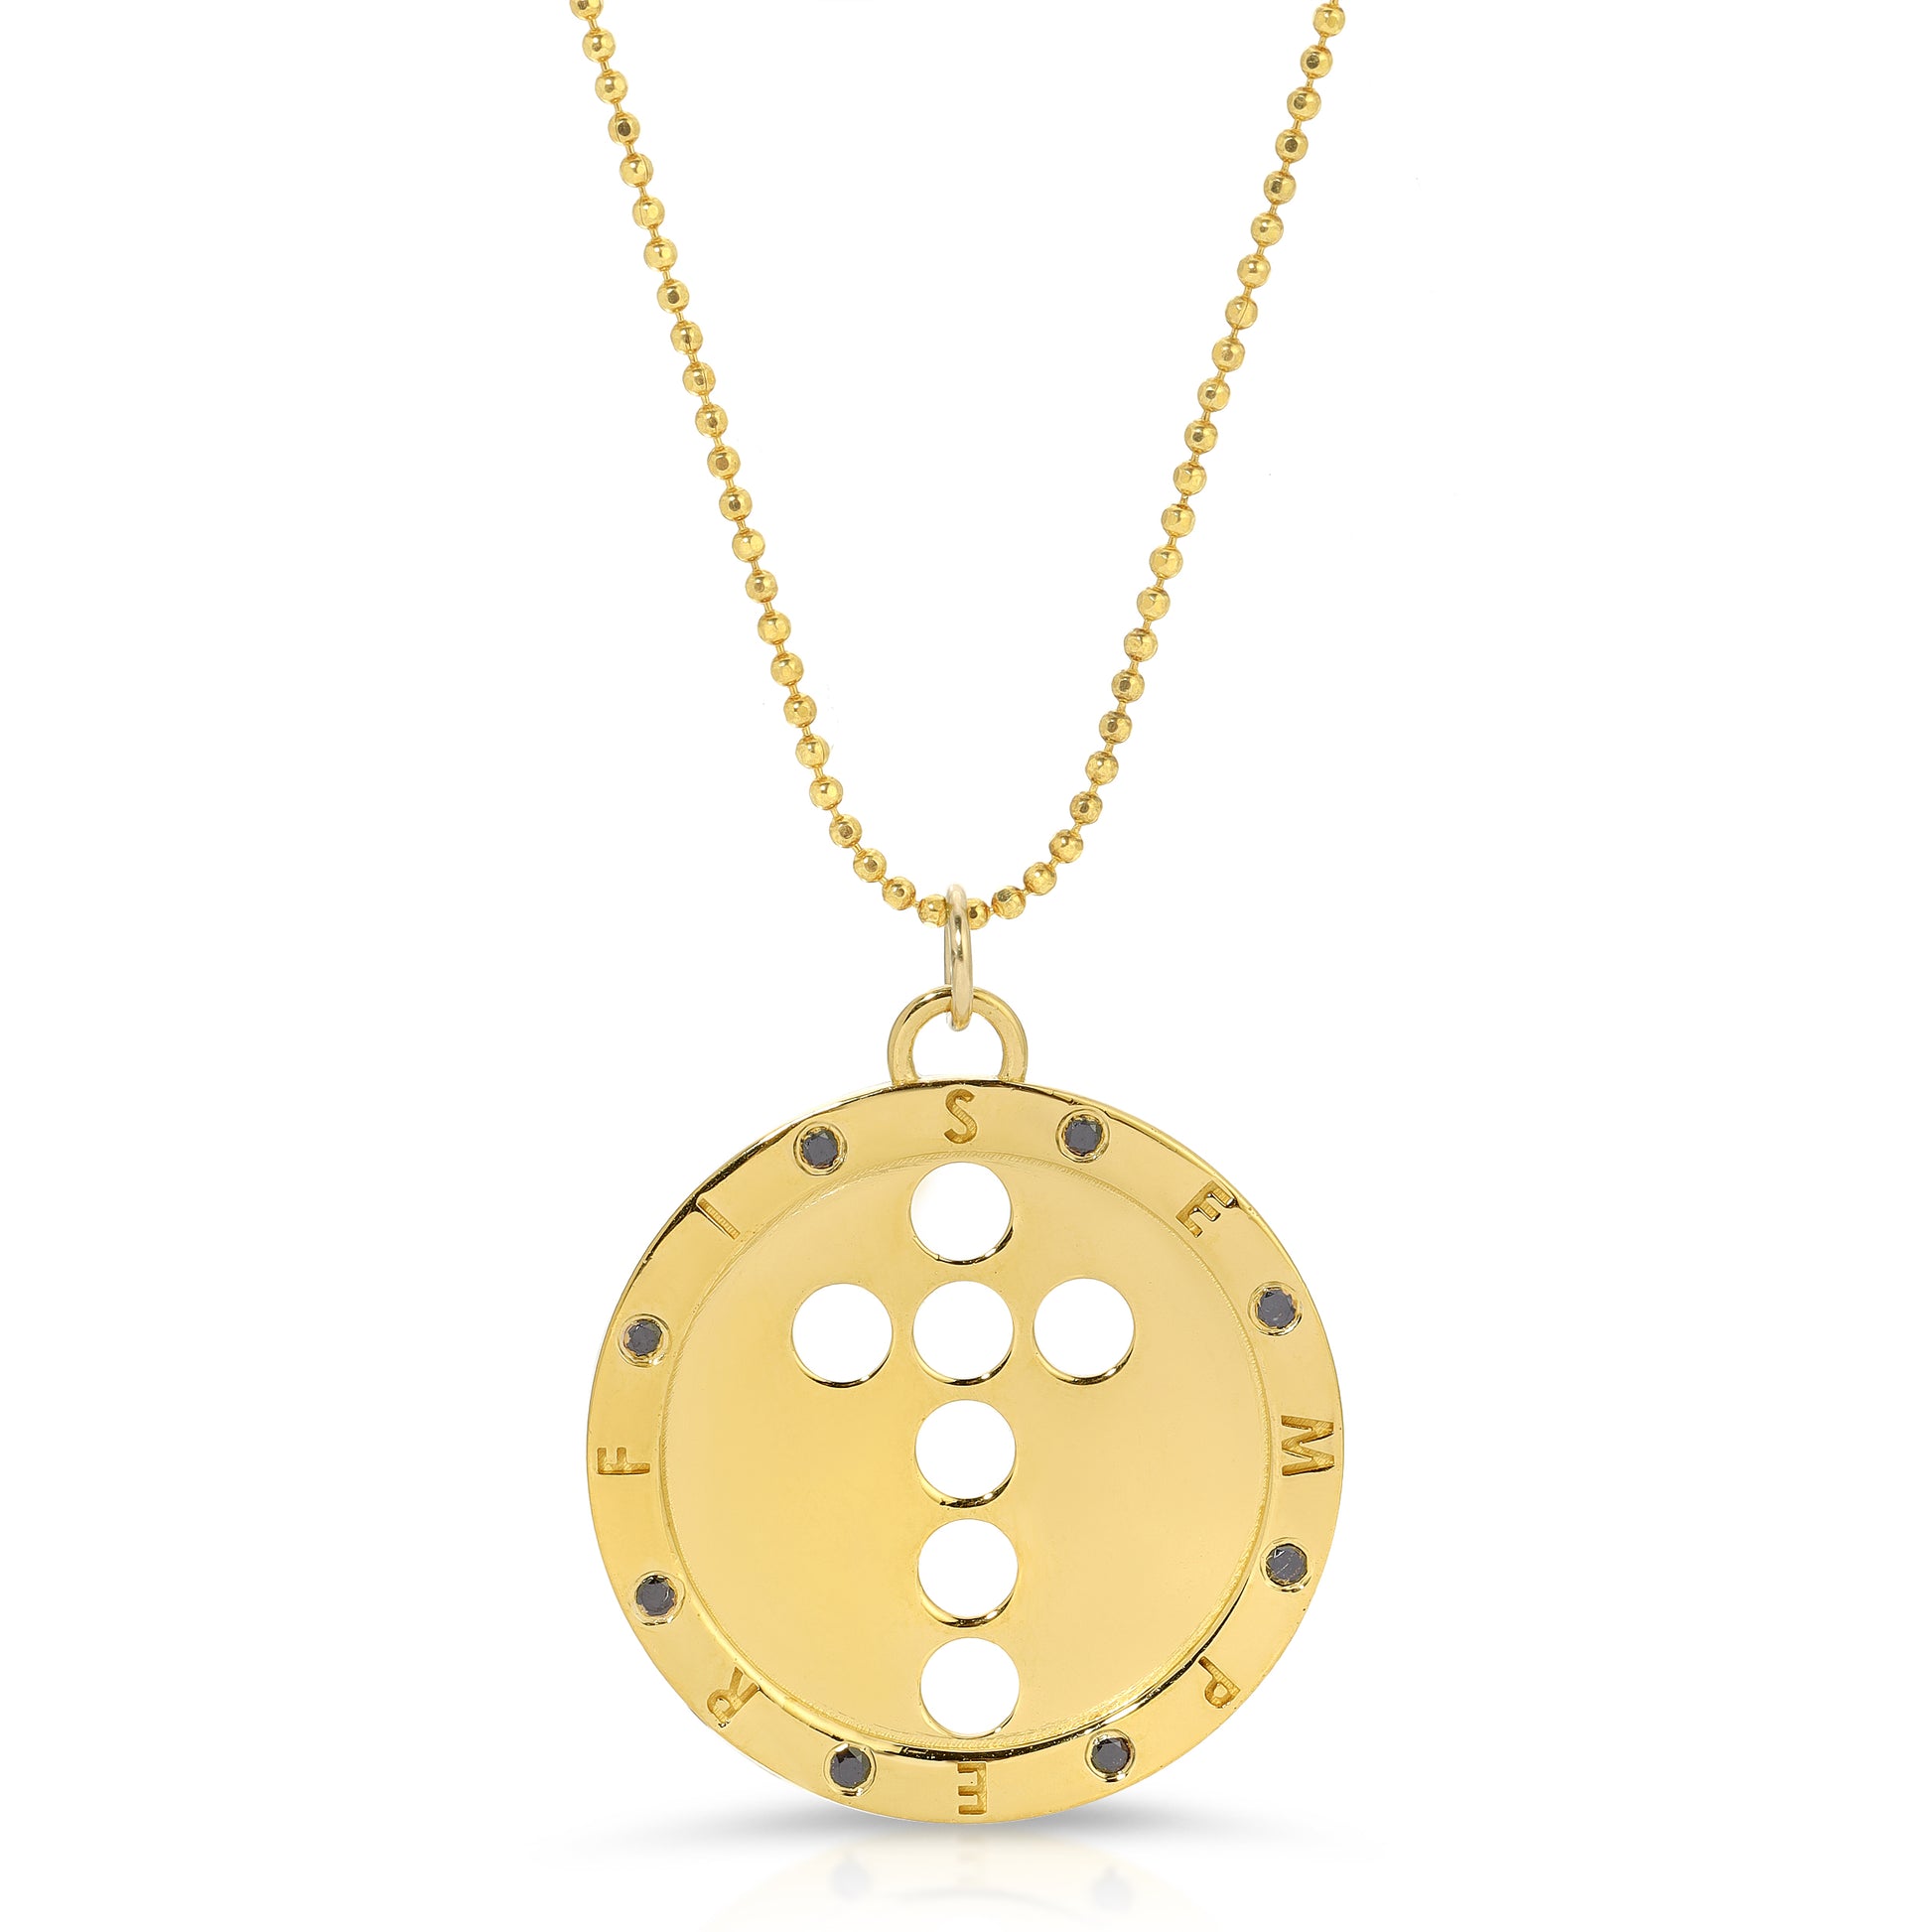 7 Black Diamond Semper Fi Gold pendant necklace from the wandering jewel